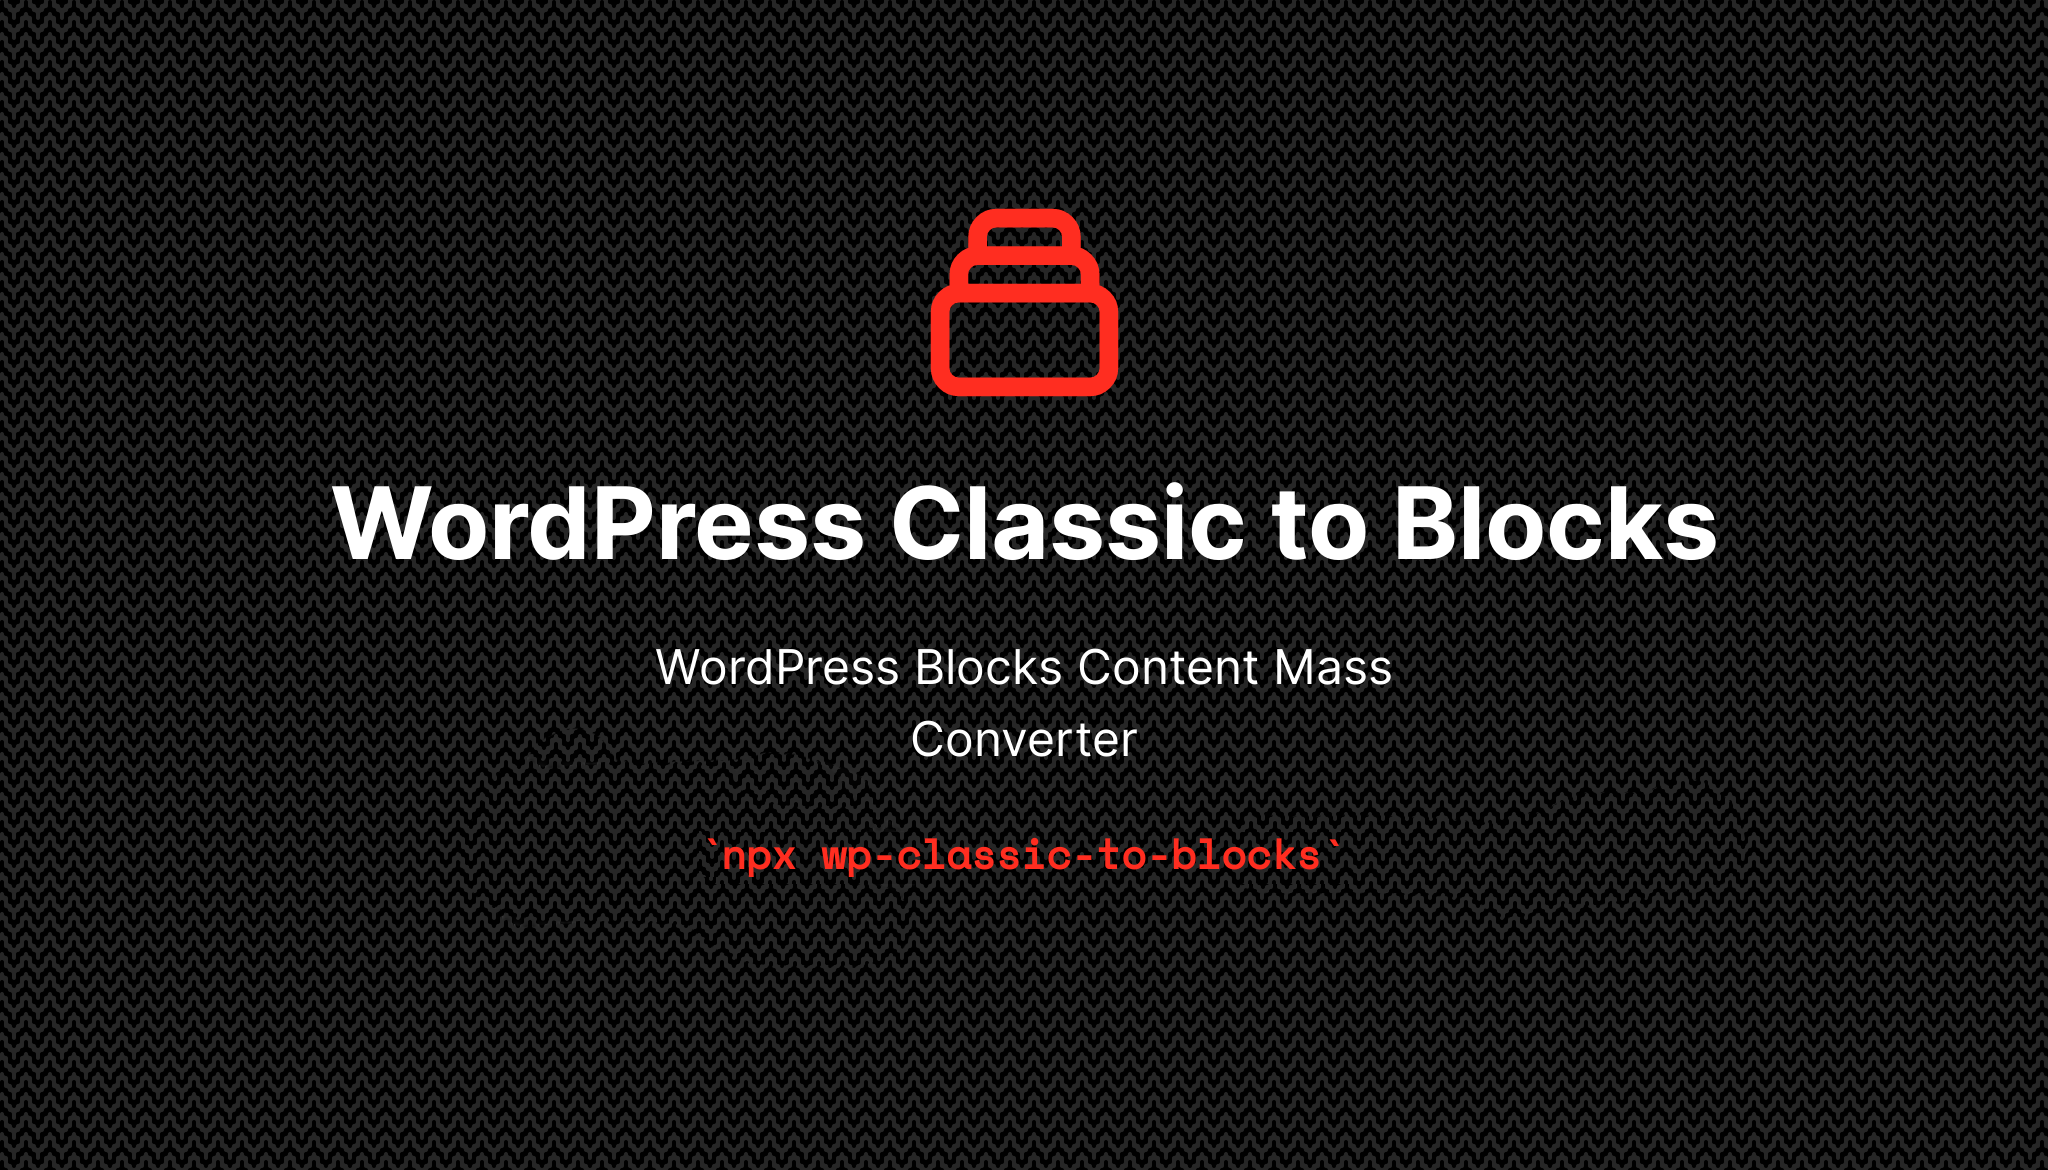 WordPress Classic to Blocks Content Mass Converter